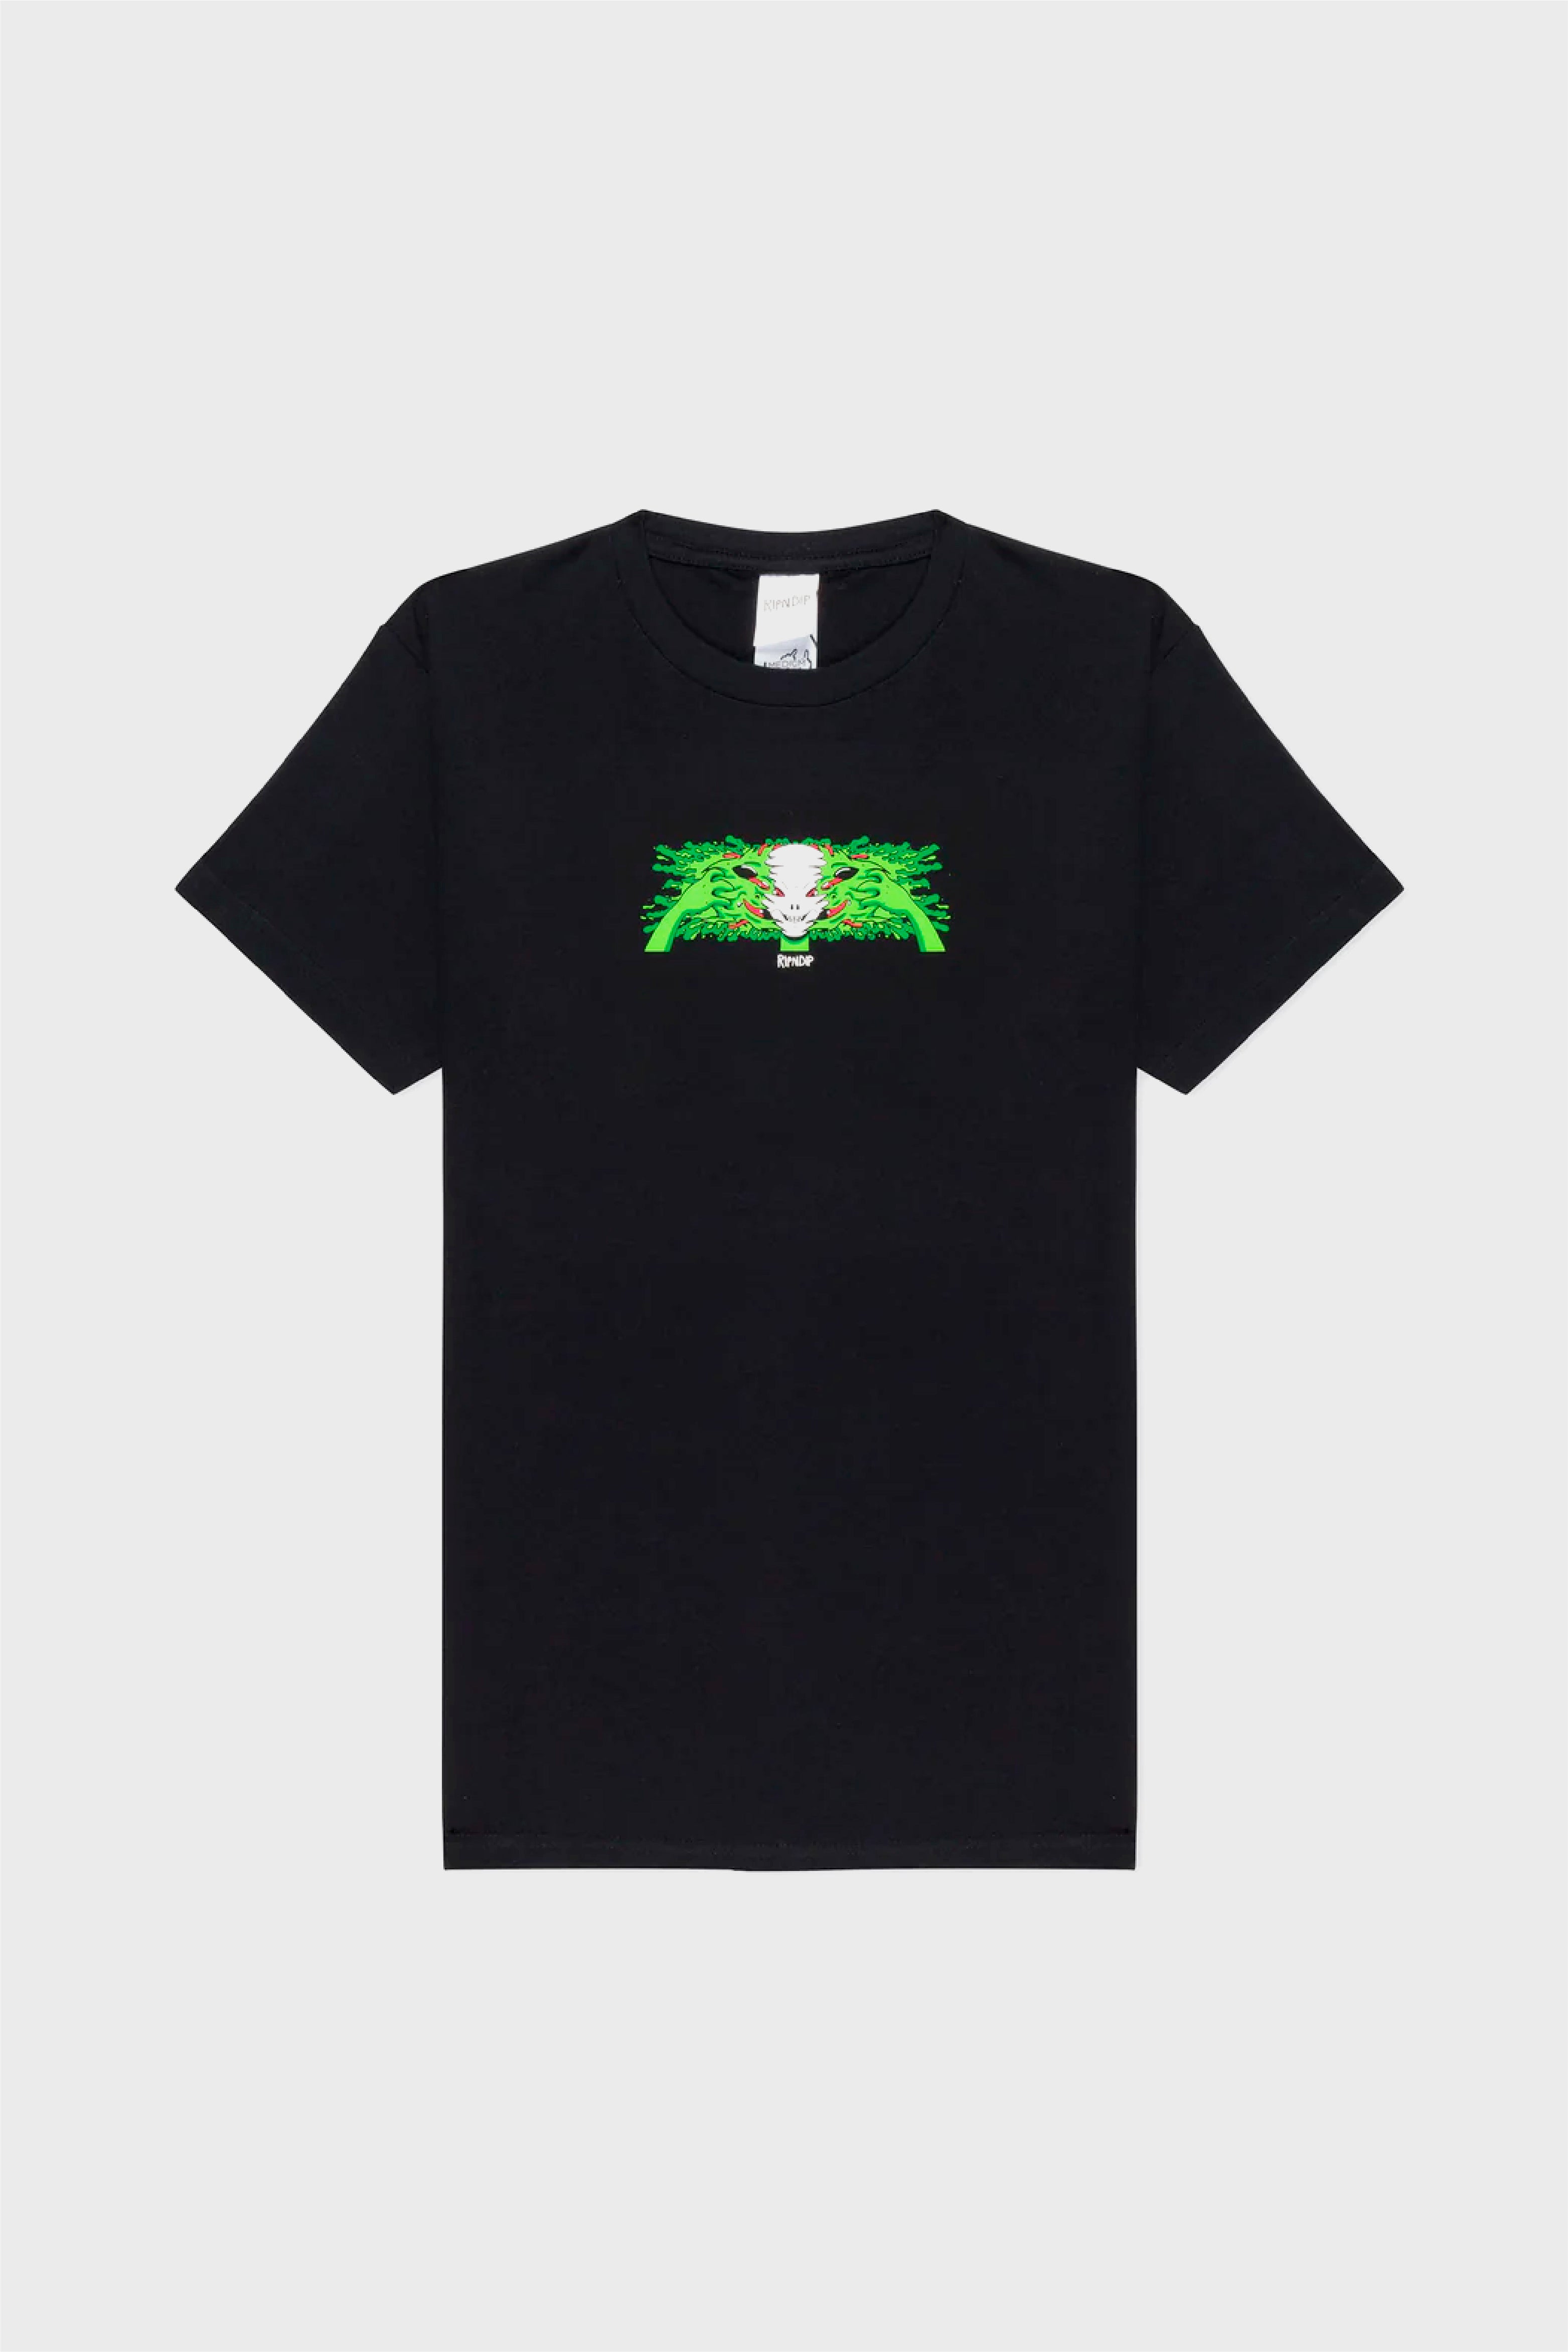 Selectshop FRAME - RIPNDIP Skull Face Tee T-Shirts Concept Store Dubai